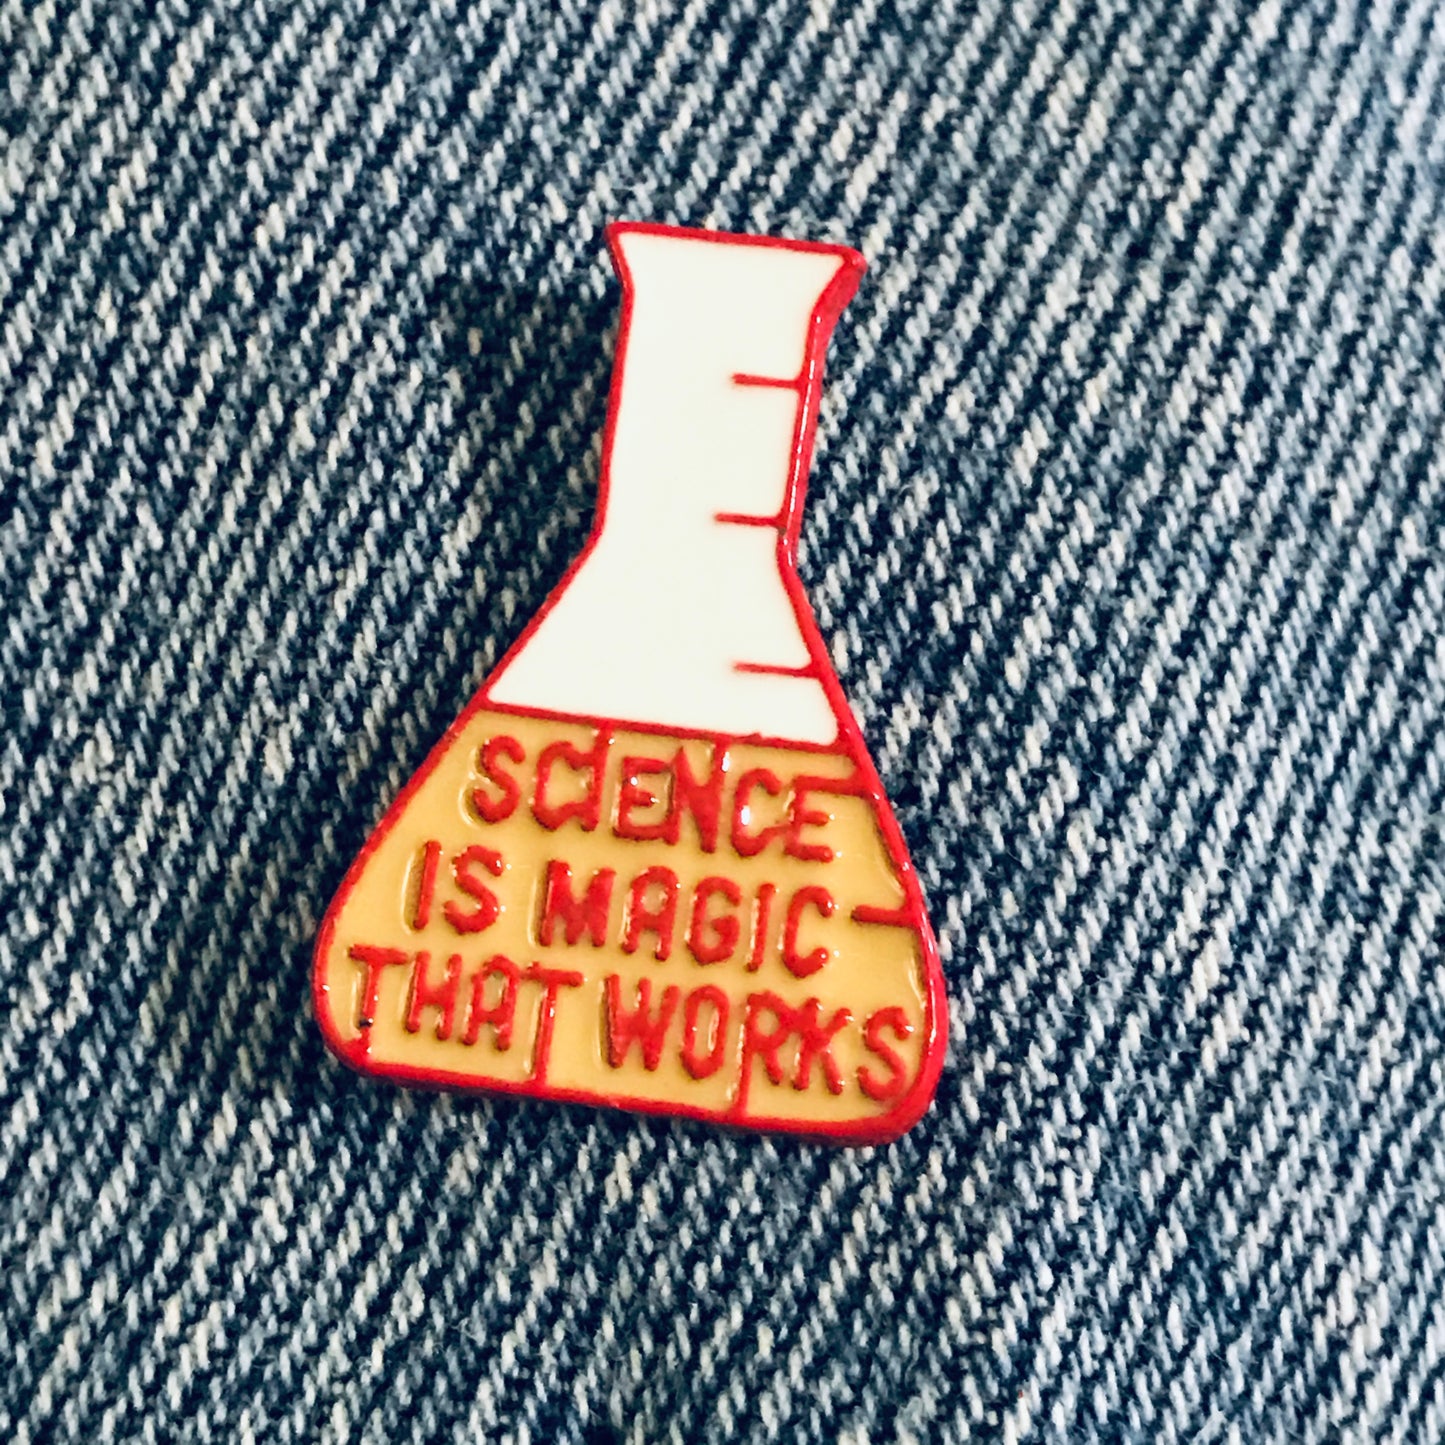 Science is magic that works enamel pin